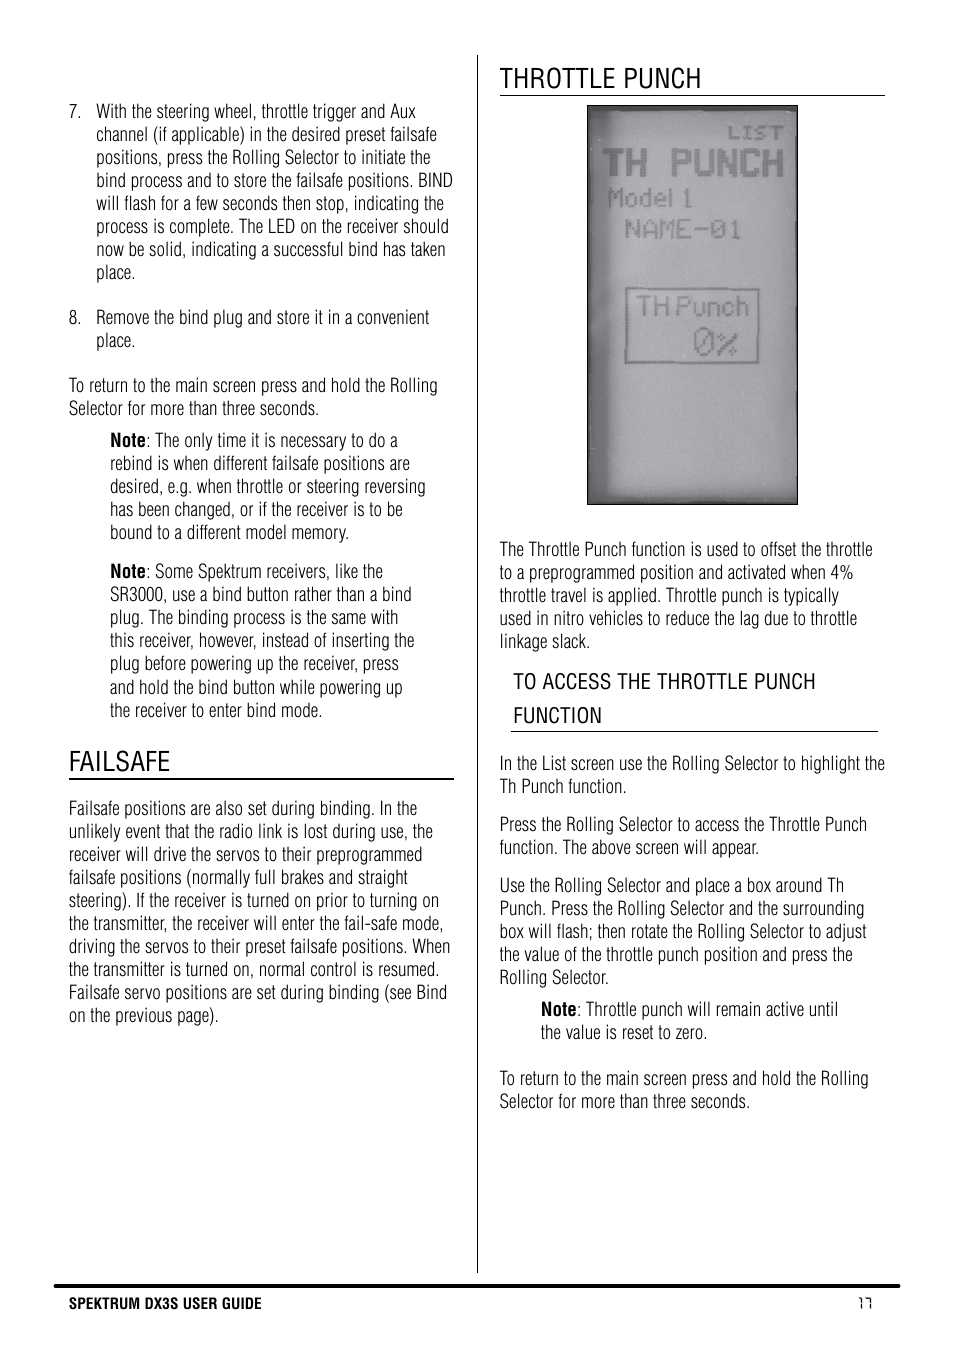 Failsafe, Throttle punch | Spektrum SPM3130 DX3S Manual User Manual | Page  17 / 30